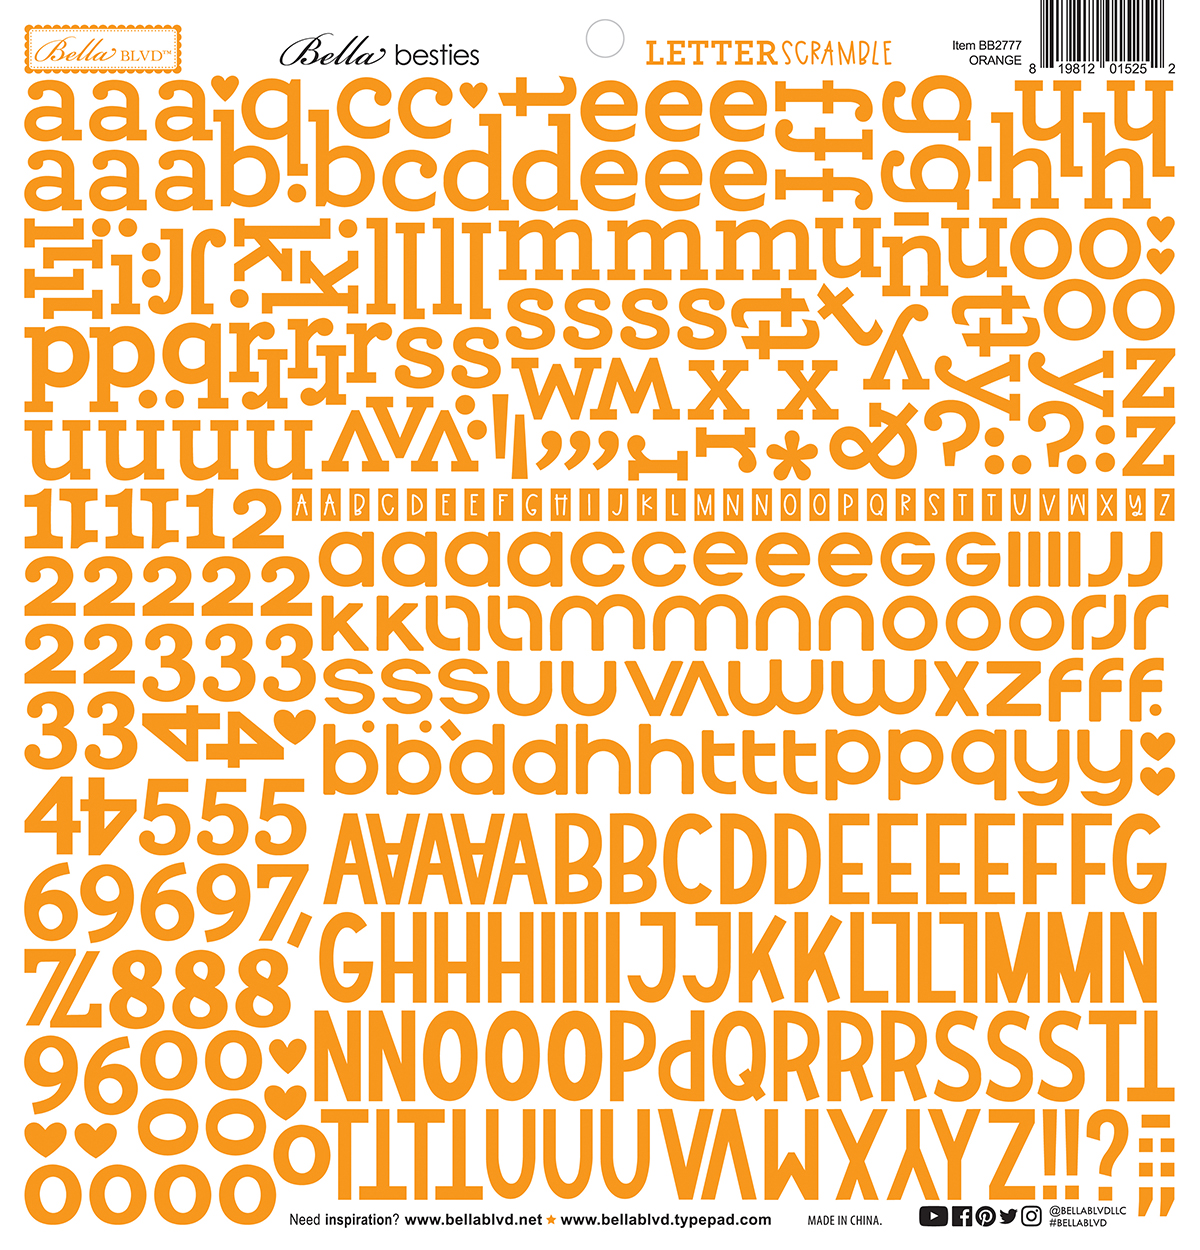 Bella Boulevard Letter Scramble Alpha Stickers Orange